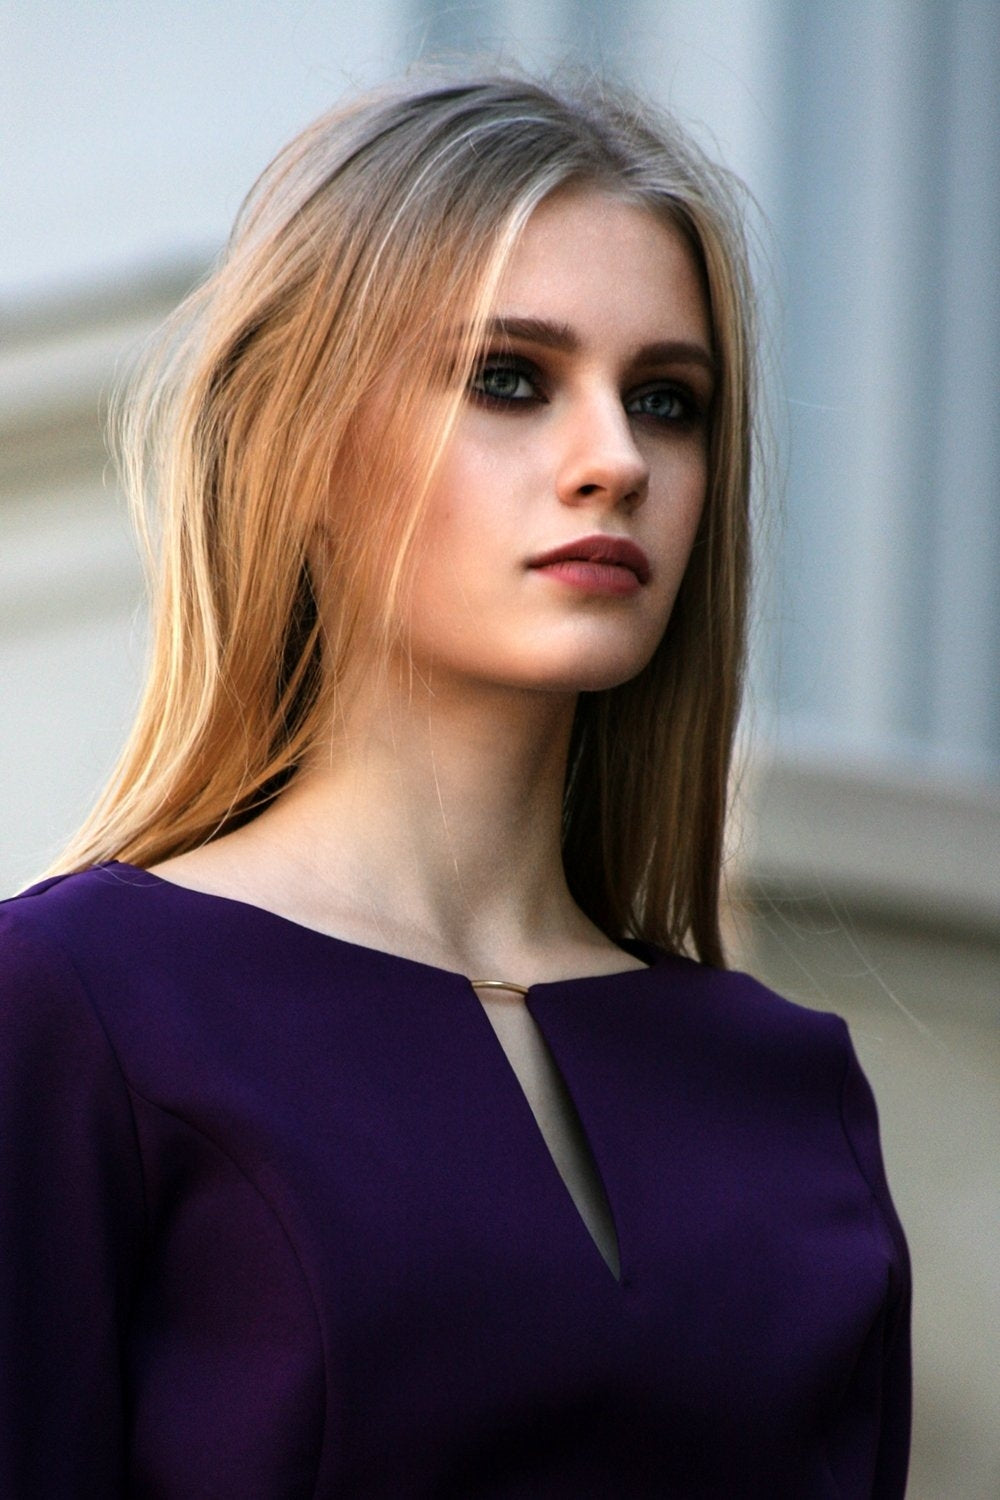 Dark purple dress with circle skirts. Golden color detail in neckline